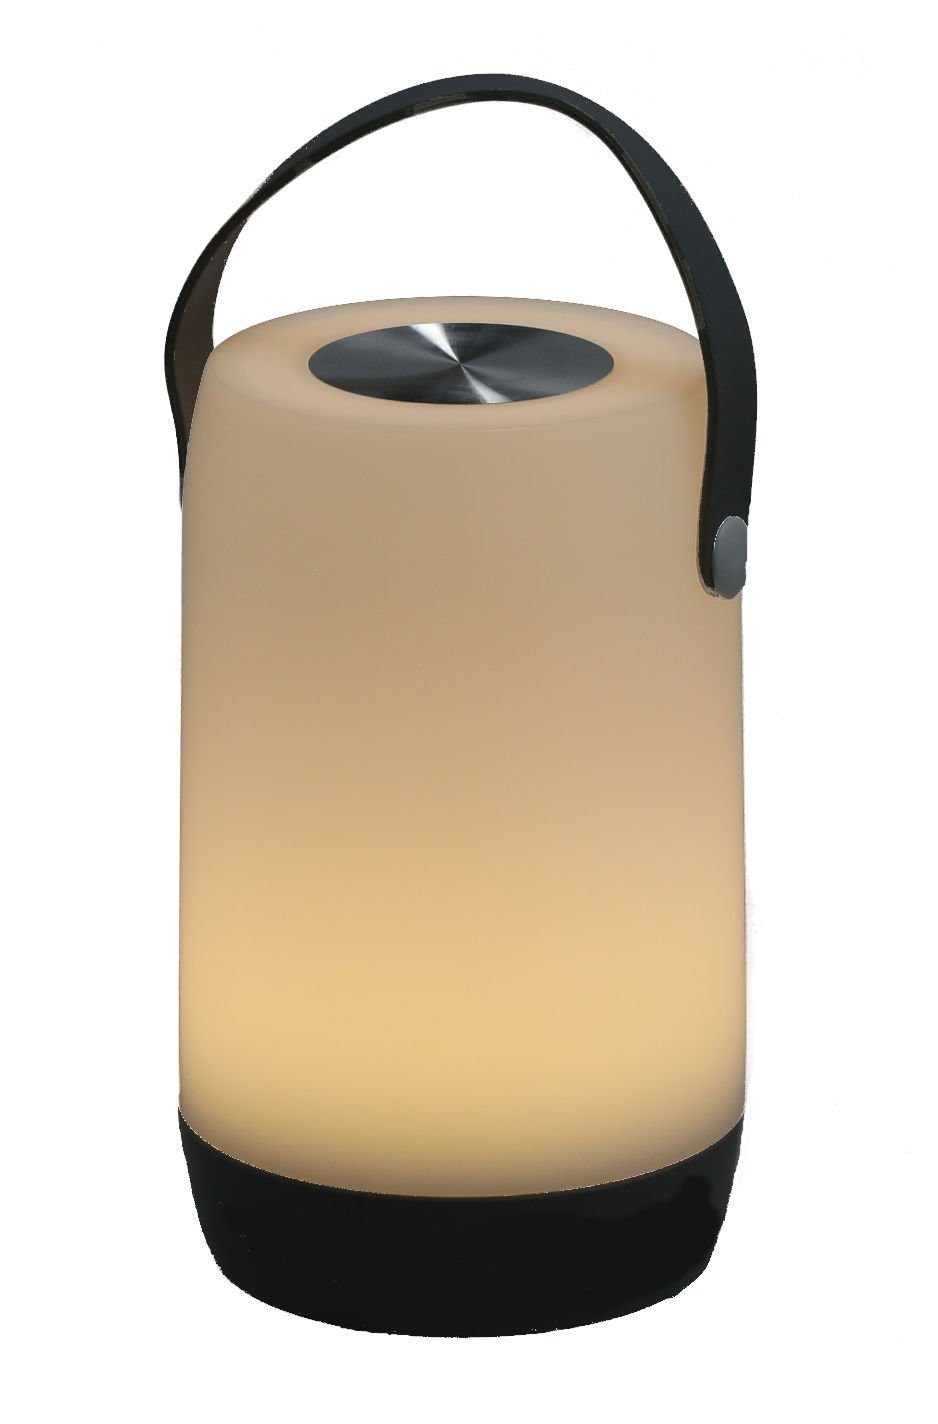 Spetebo LED Tischleuchte LED Touch Tischlampe warm weiß - 19 cm, LED, warm weiß, Touch Funktion